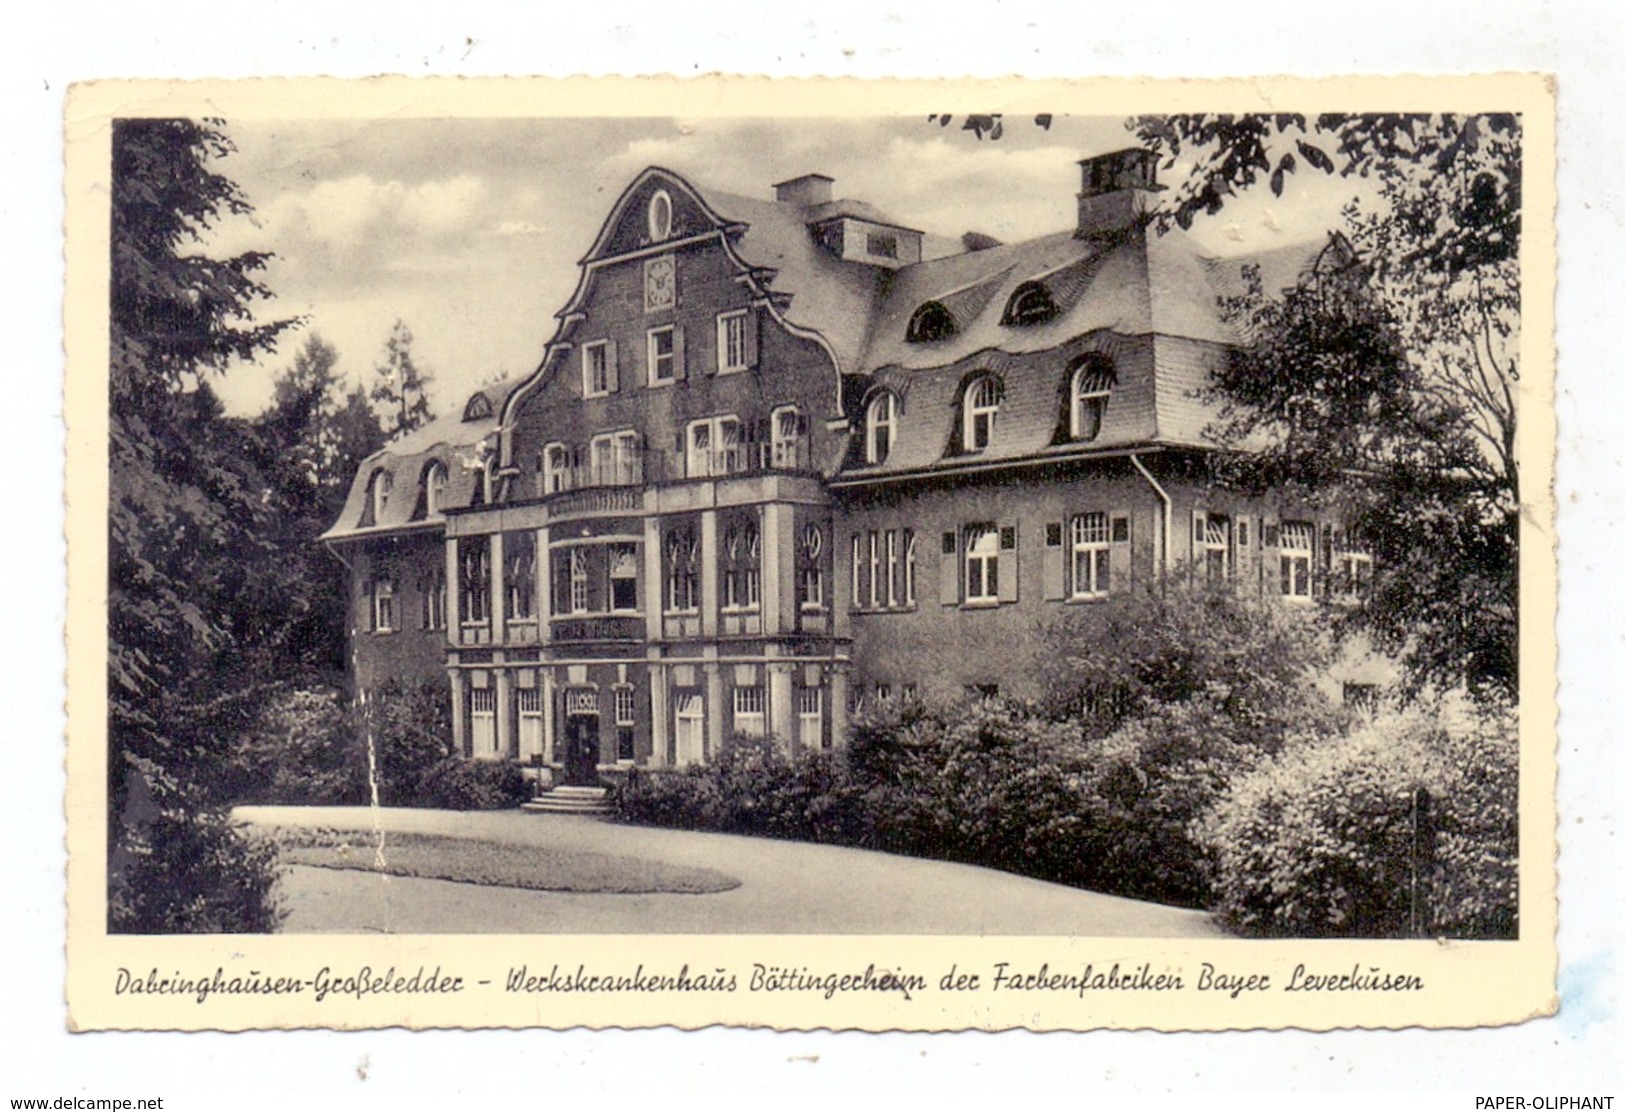 5632 WERMELSKIRCHEN - DABRINGHAUSEN - GROSSELEDDER, Bayer Werkskrnkenhaus, 1954, Duckstelle - Wermelskirchen